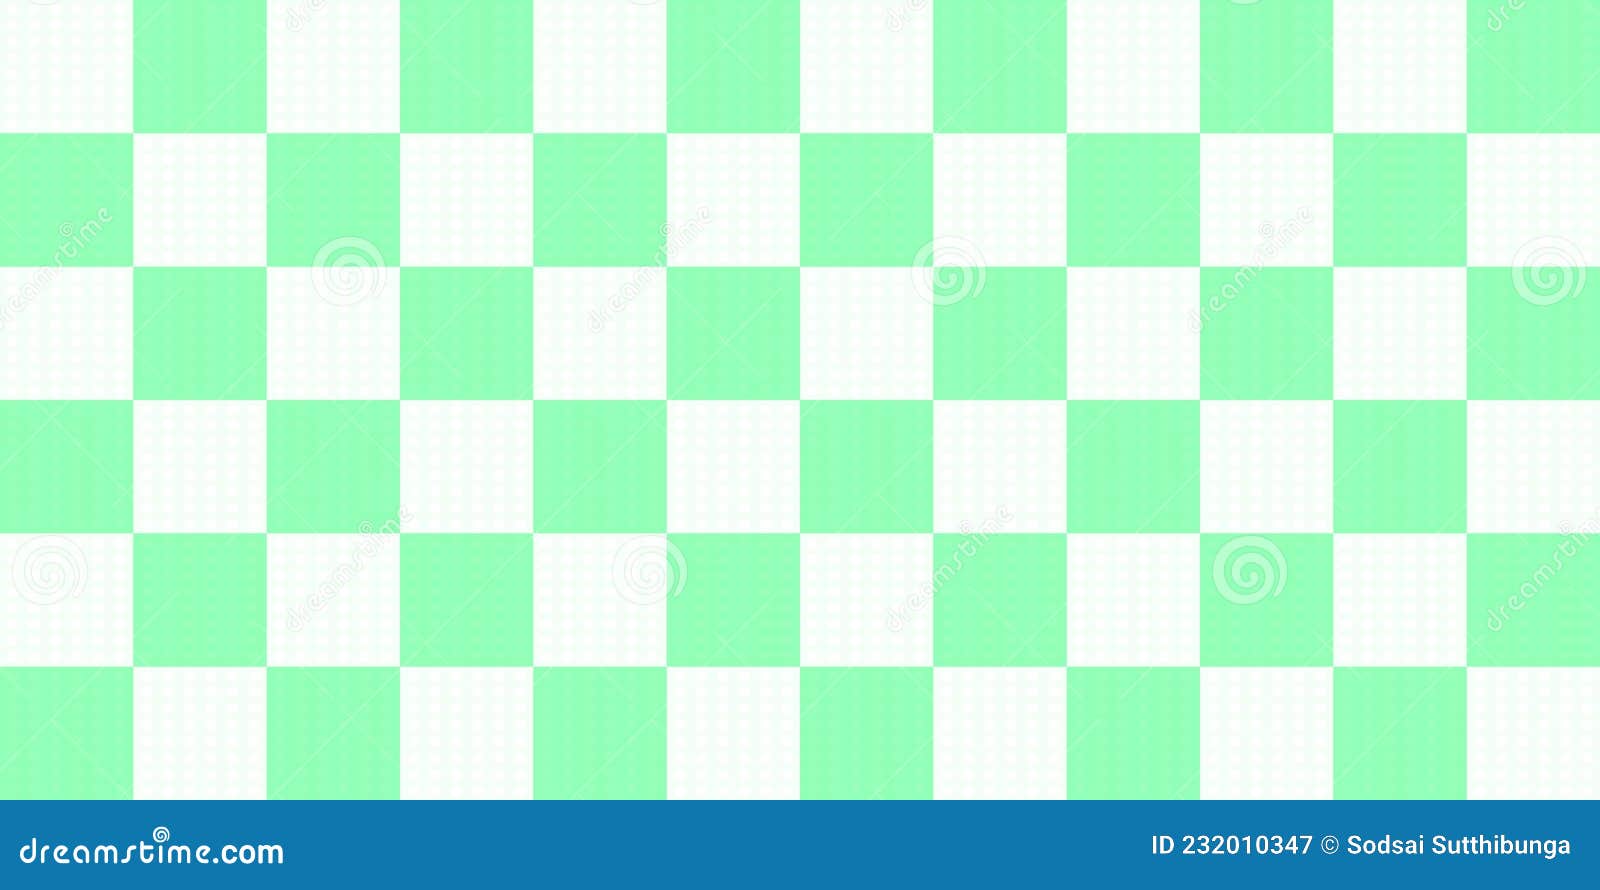 Plano de fundo xadrez tartan sem costura com textura e cor pastel